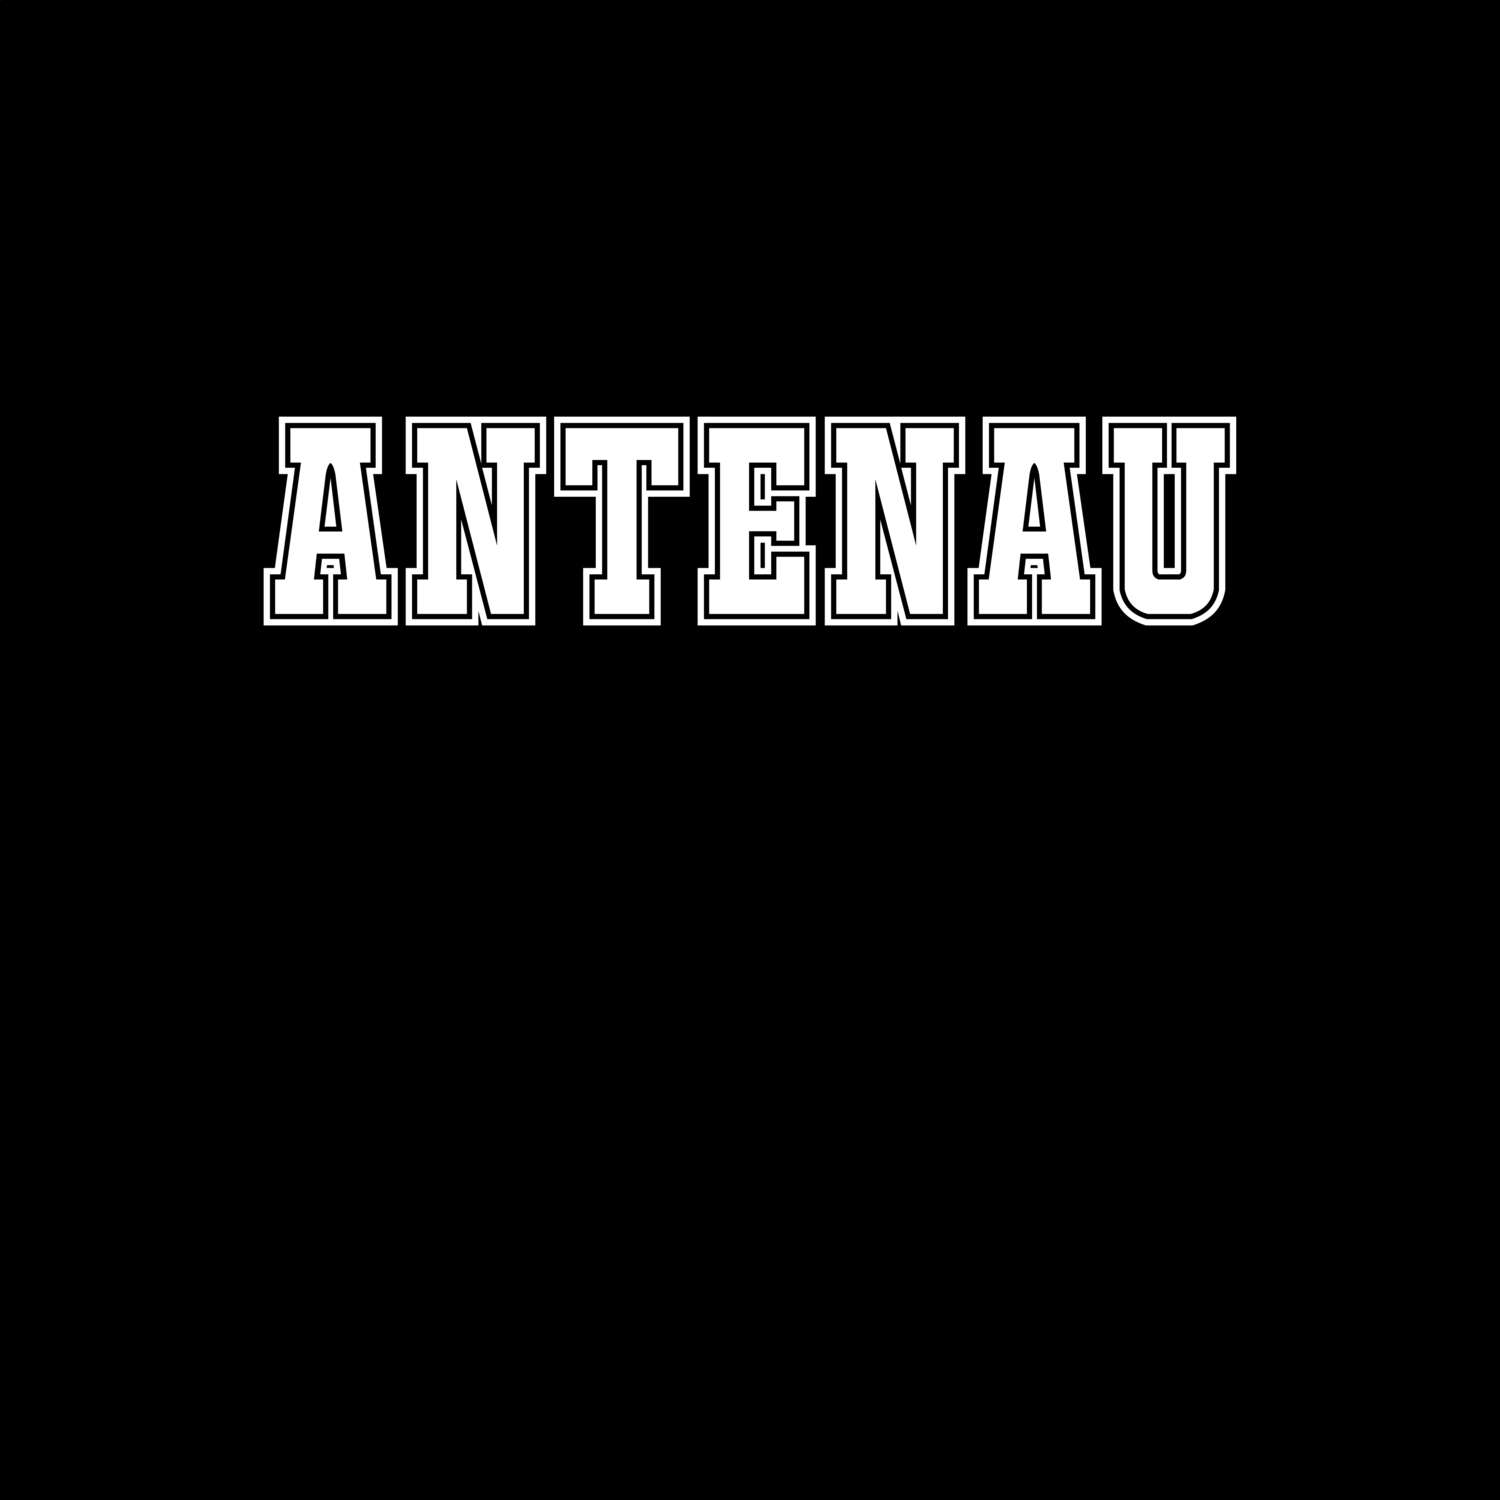 Antenau T-Shirt »Classic«